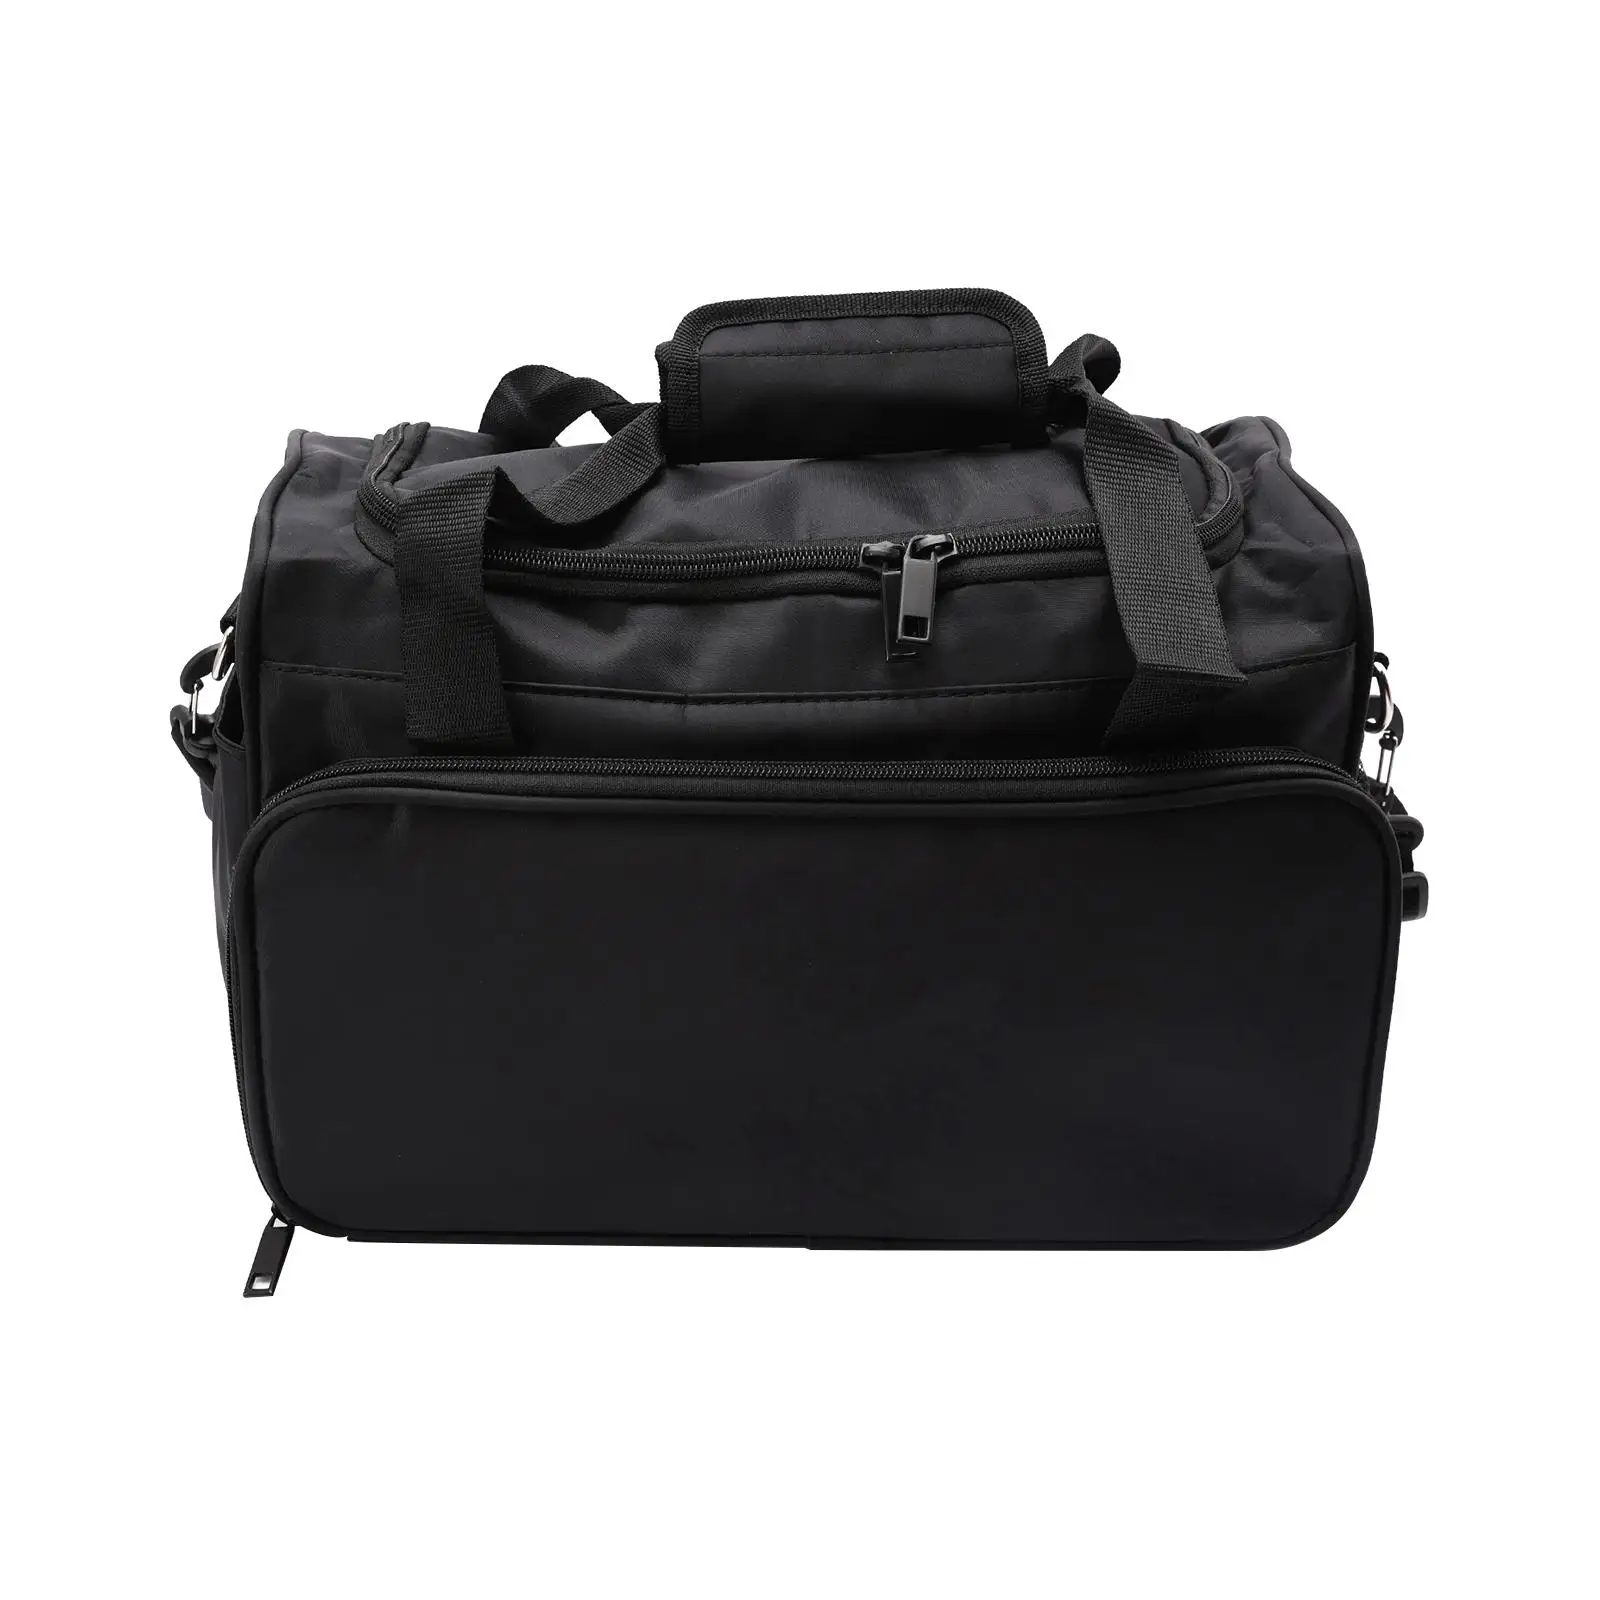 Portable Hairdressing Tool Bag Travel Luggage Pouch Hairdresser Bag Nylon Multifunctional Salon Barber Handbag for Clips